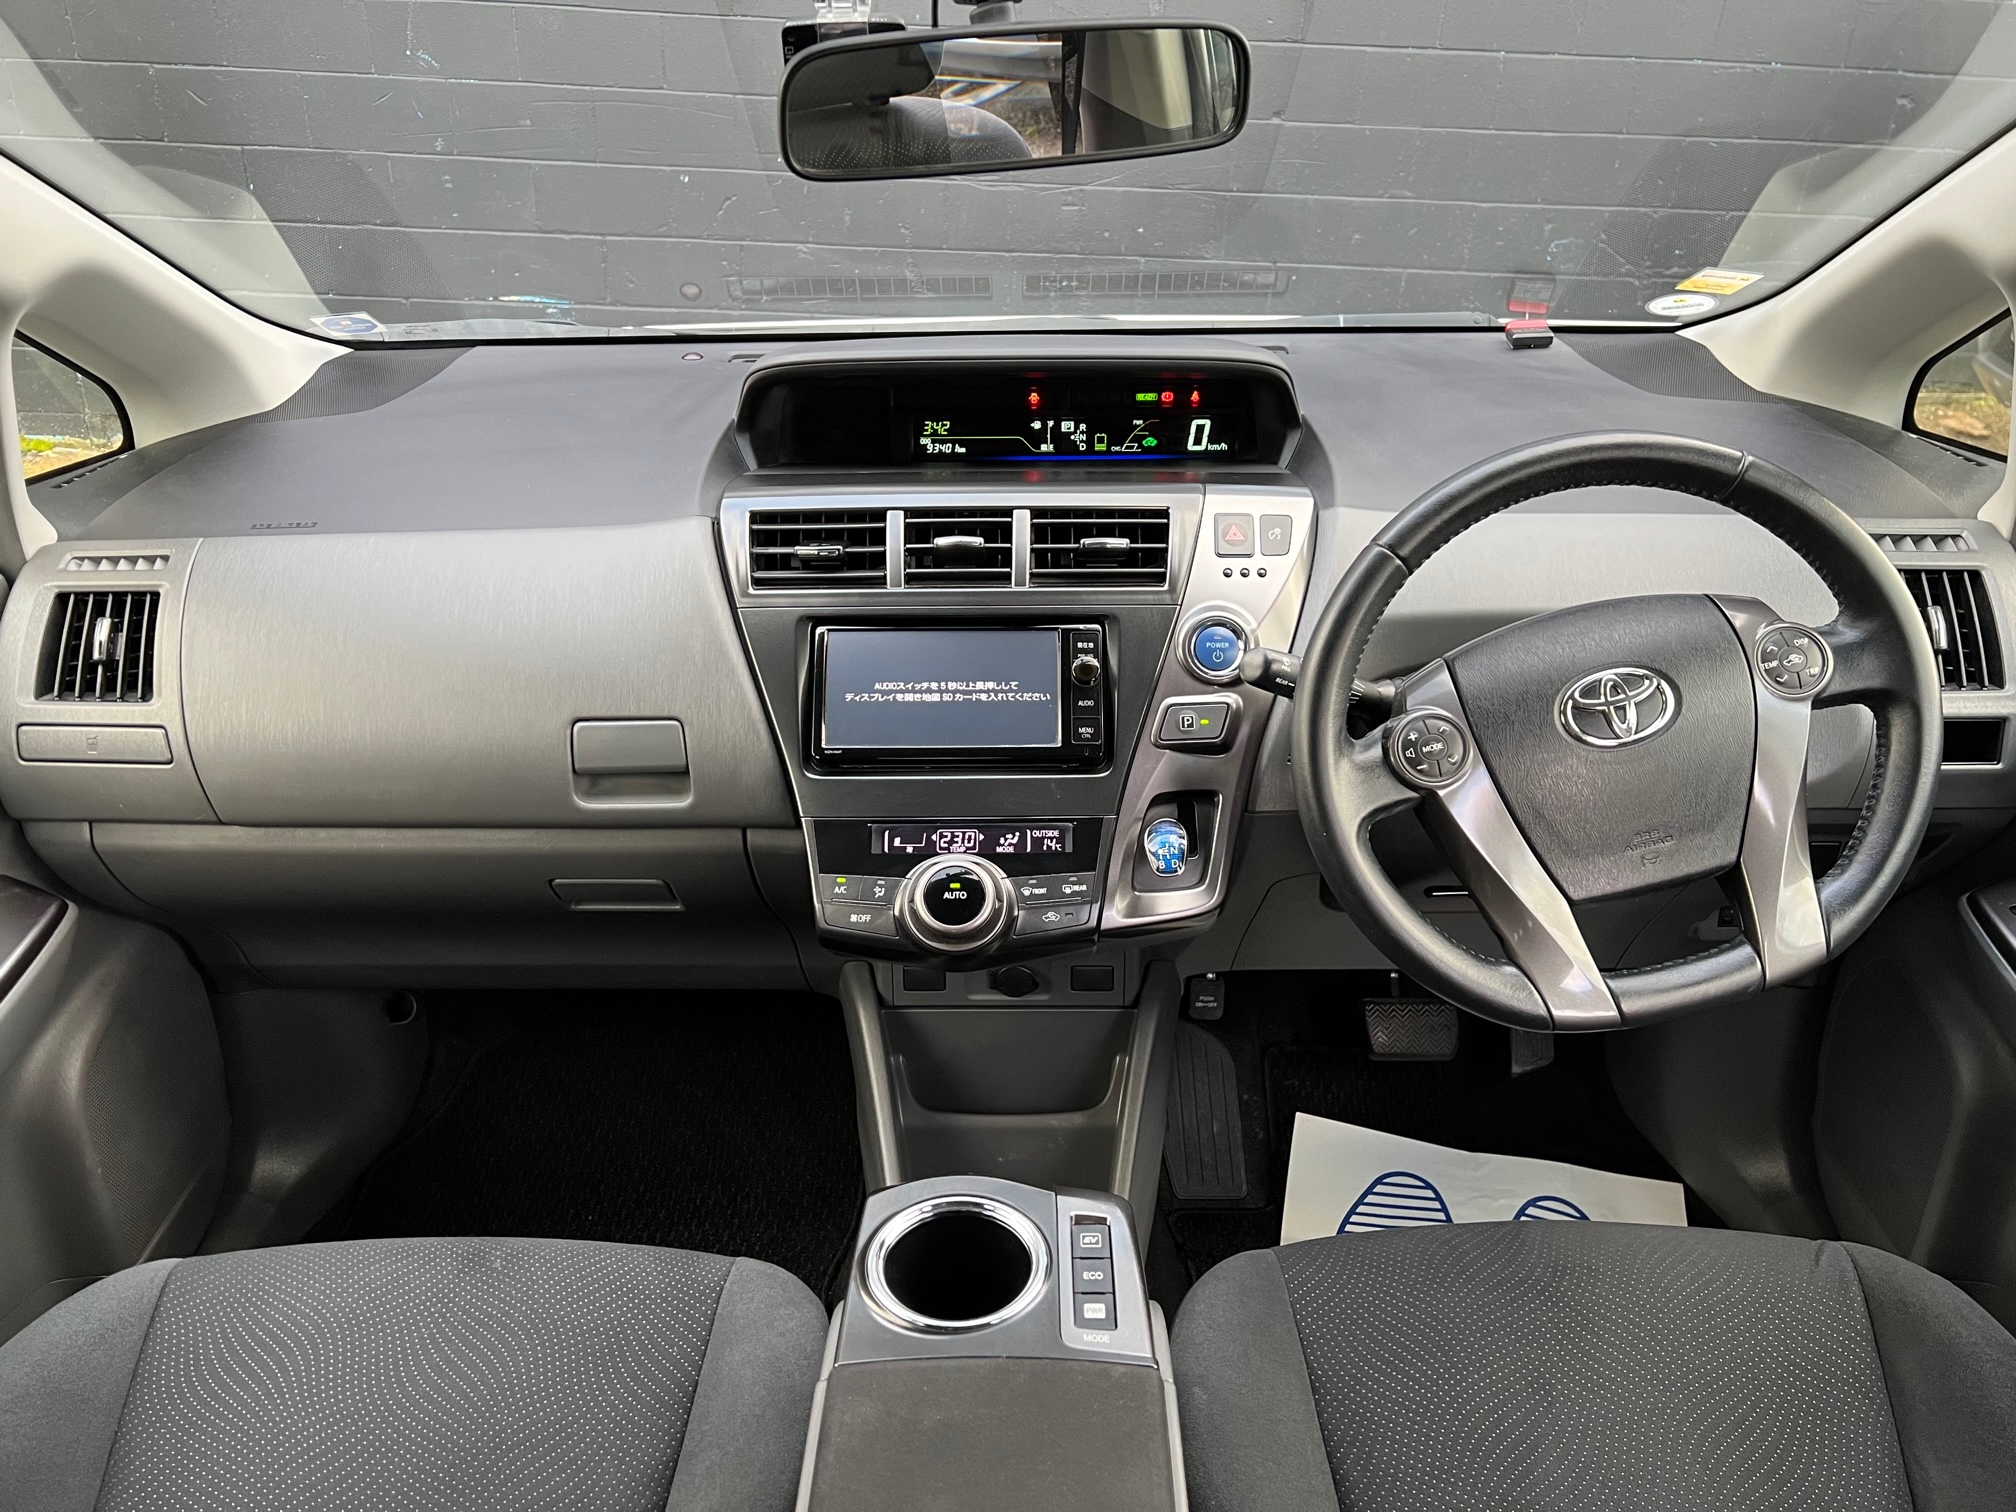 Toyota Alpha Prius 2014 Image 14